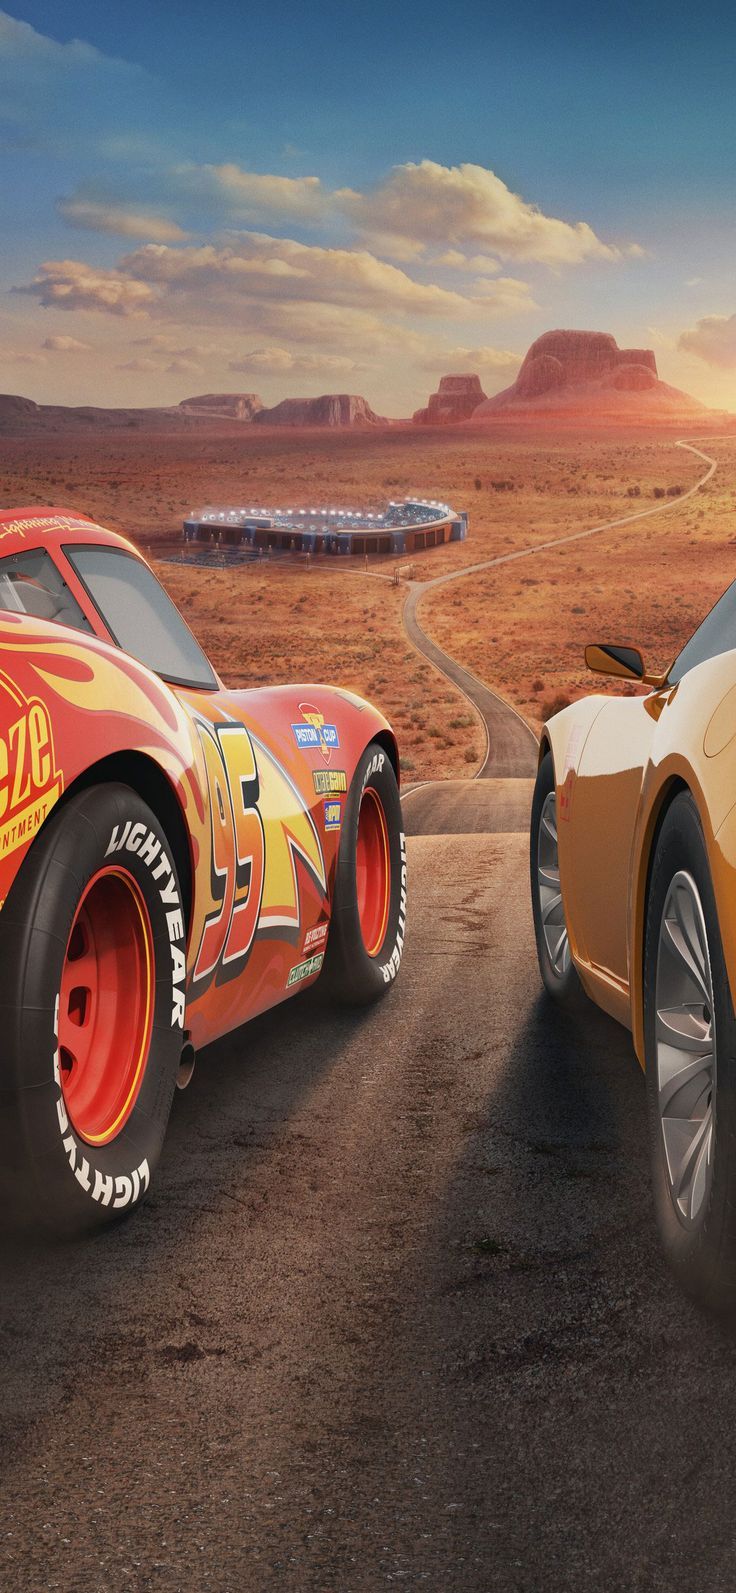 Free Disney wallpaper for iPhone. Disney cars wallpaper, Cars movie, Disney pixar cars